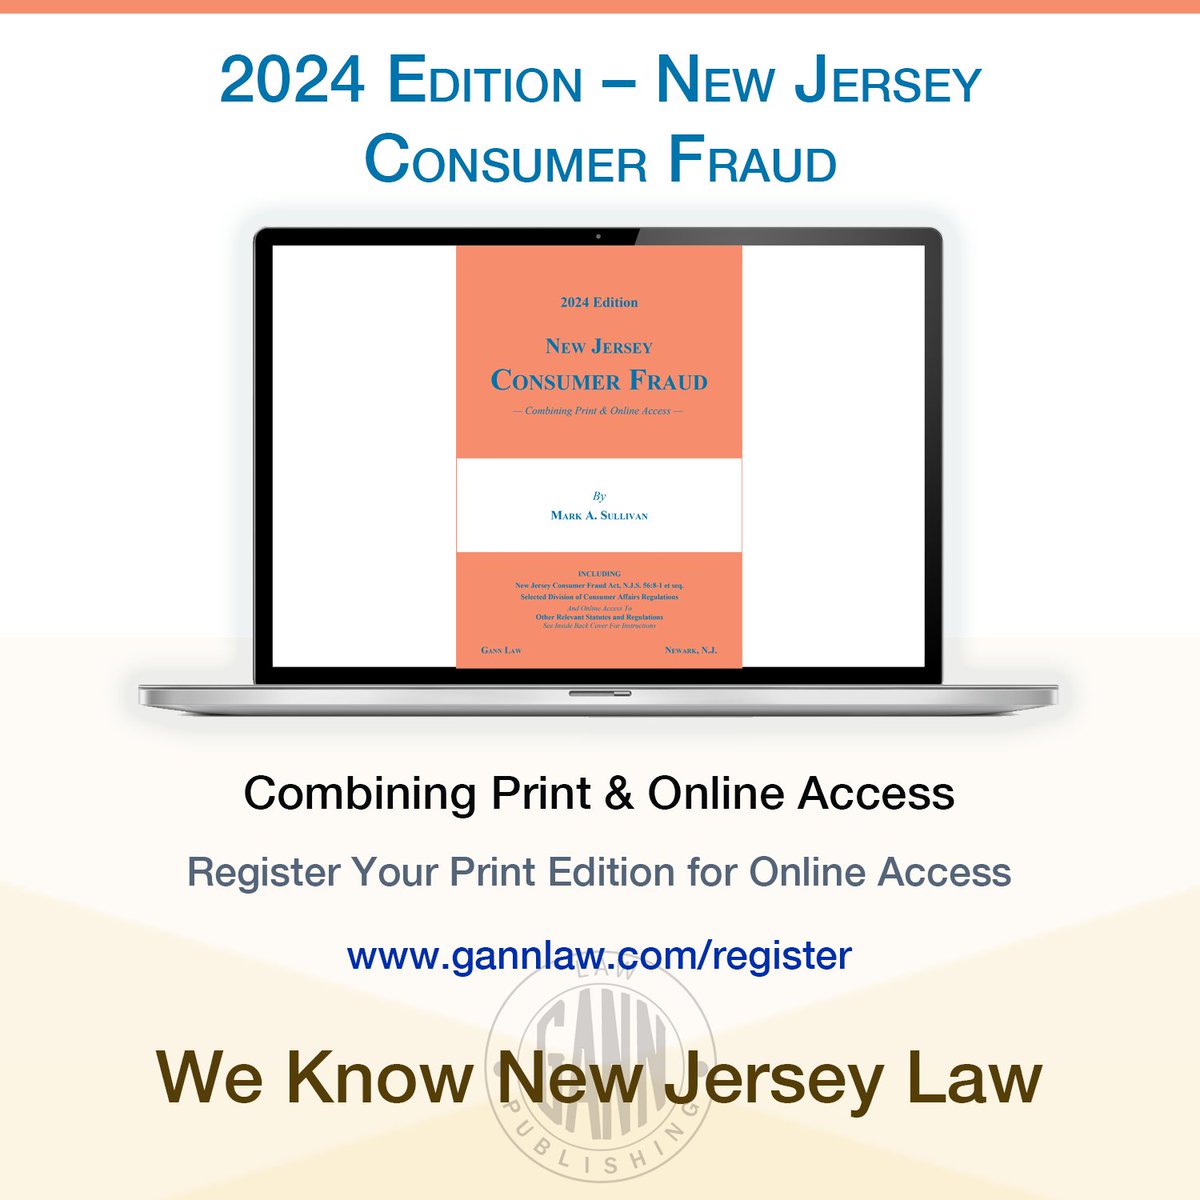 2024 New Jersey Consumer Fraud by Mark A. Sullivan (@MarkASullivan1). Print + Online Access

bit.ly/T-ConsumerFraud

#gannlaw #gannlawbooks #consumerfraud #njconsumerfraud #njlaw #njlaws #njfraudlaws #bbb #njbetterbusinessbureau #njlawyers #njlawyer #njattorney #njattorneys